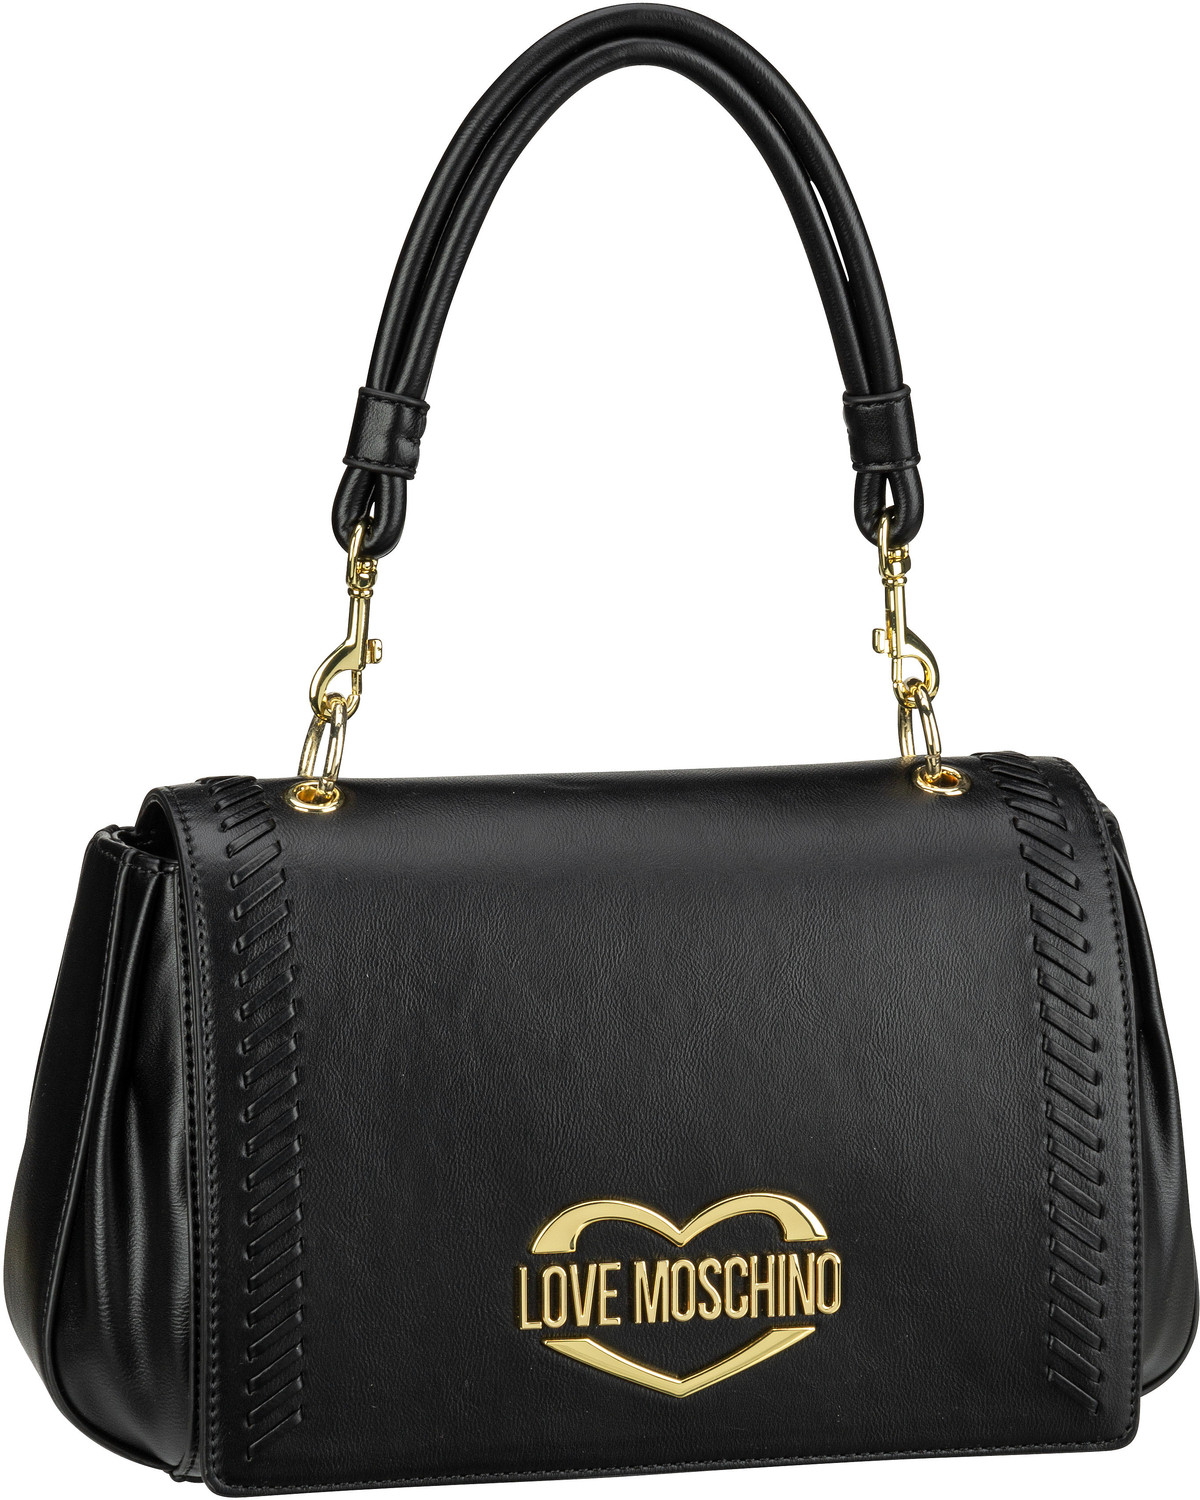 Love Moschino Whip Stitch Shoulder Bag 4055 - Black